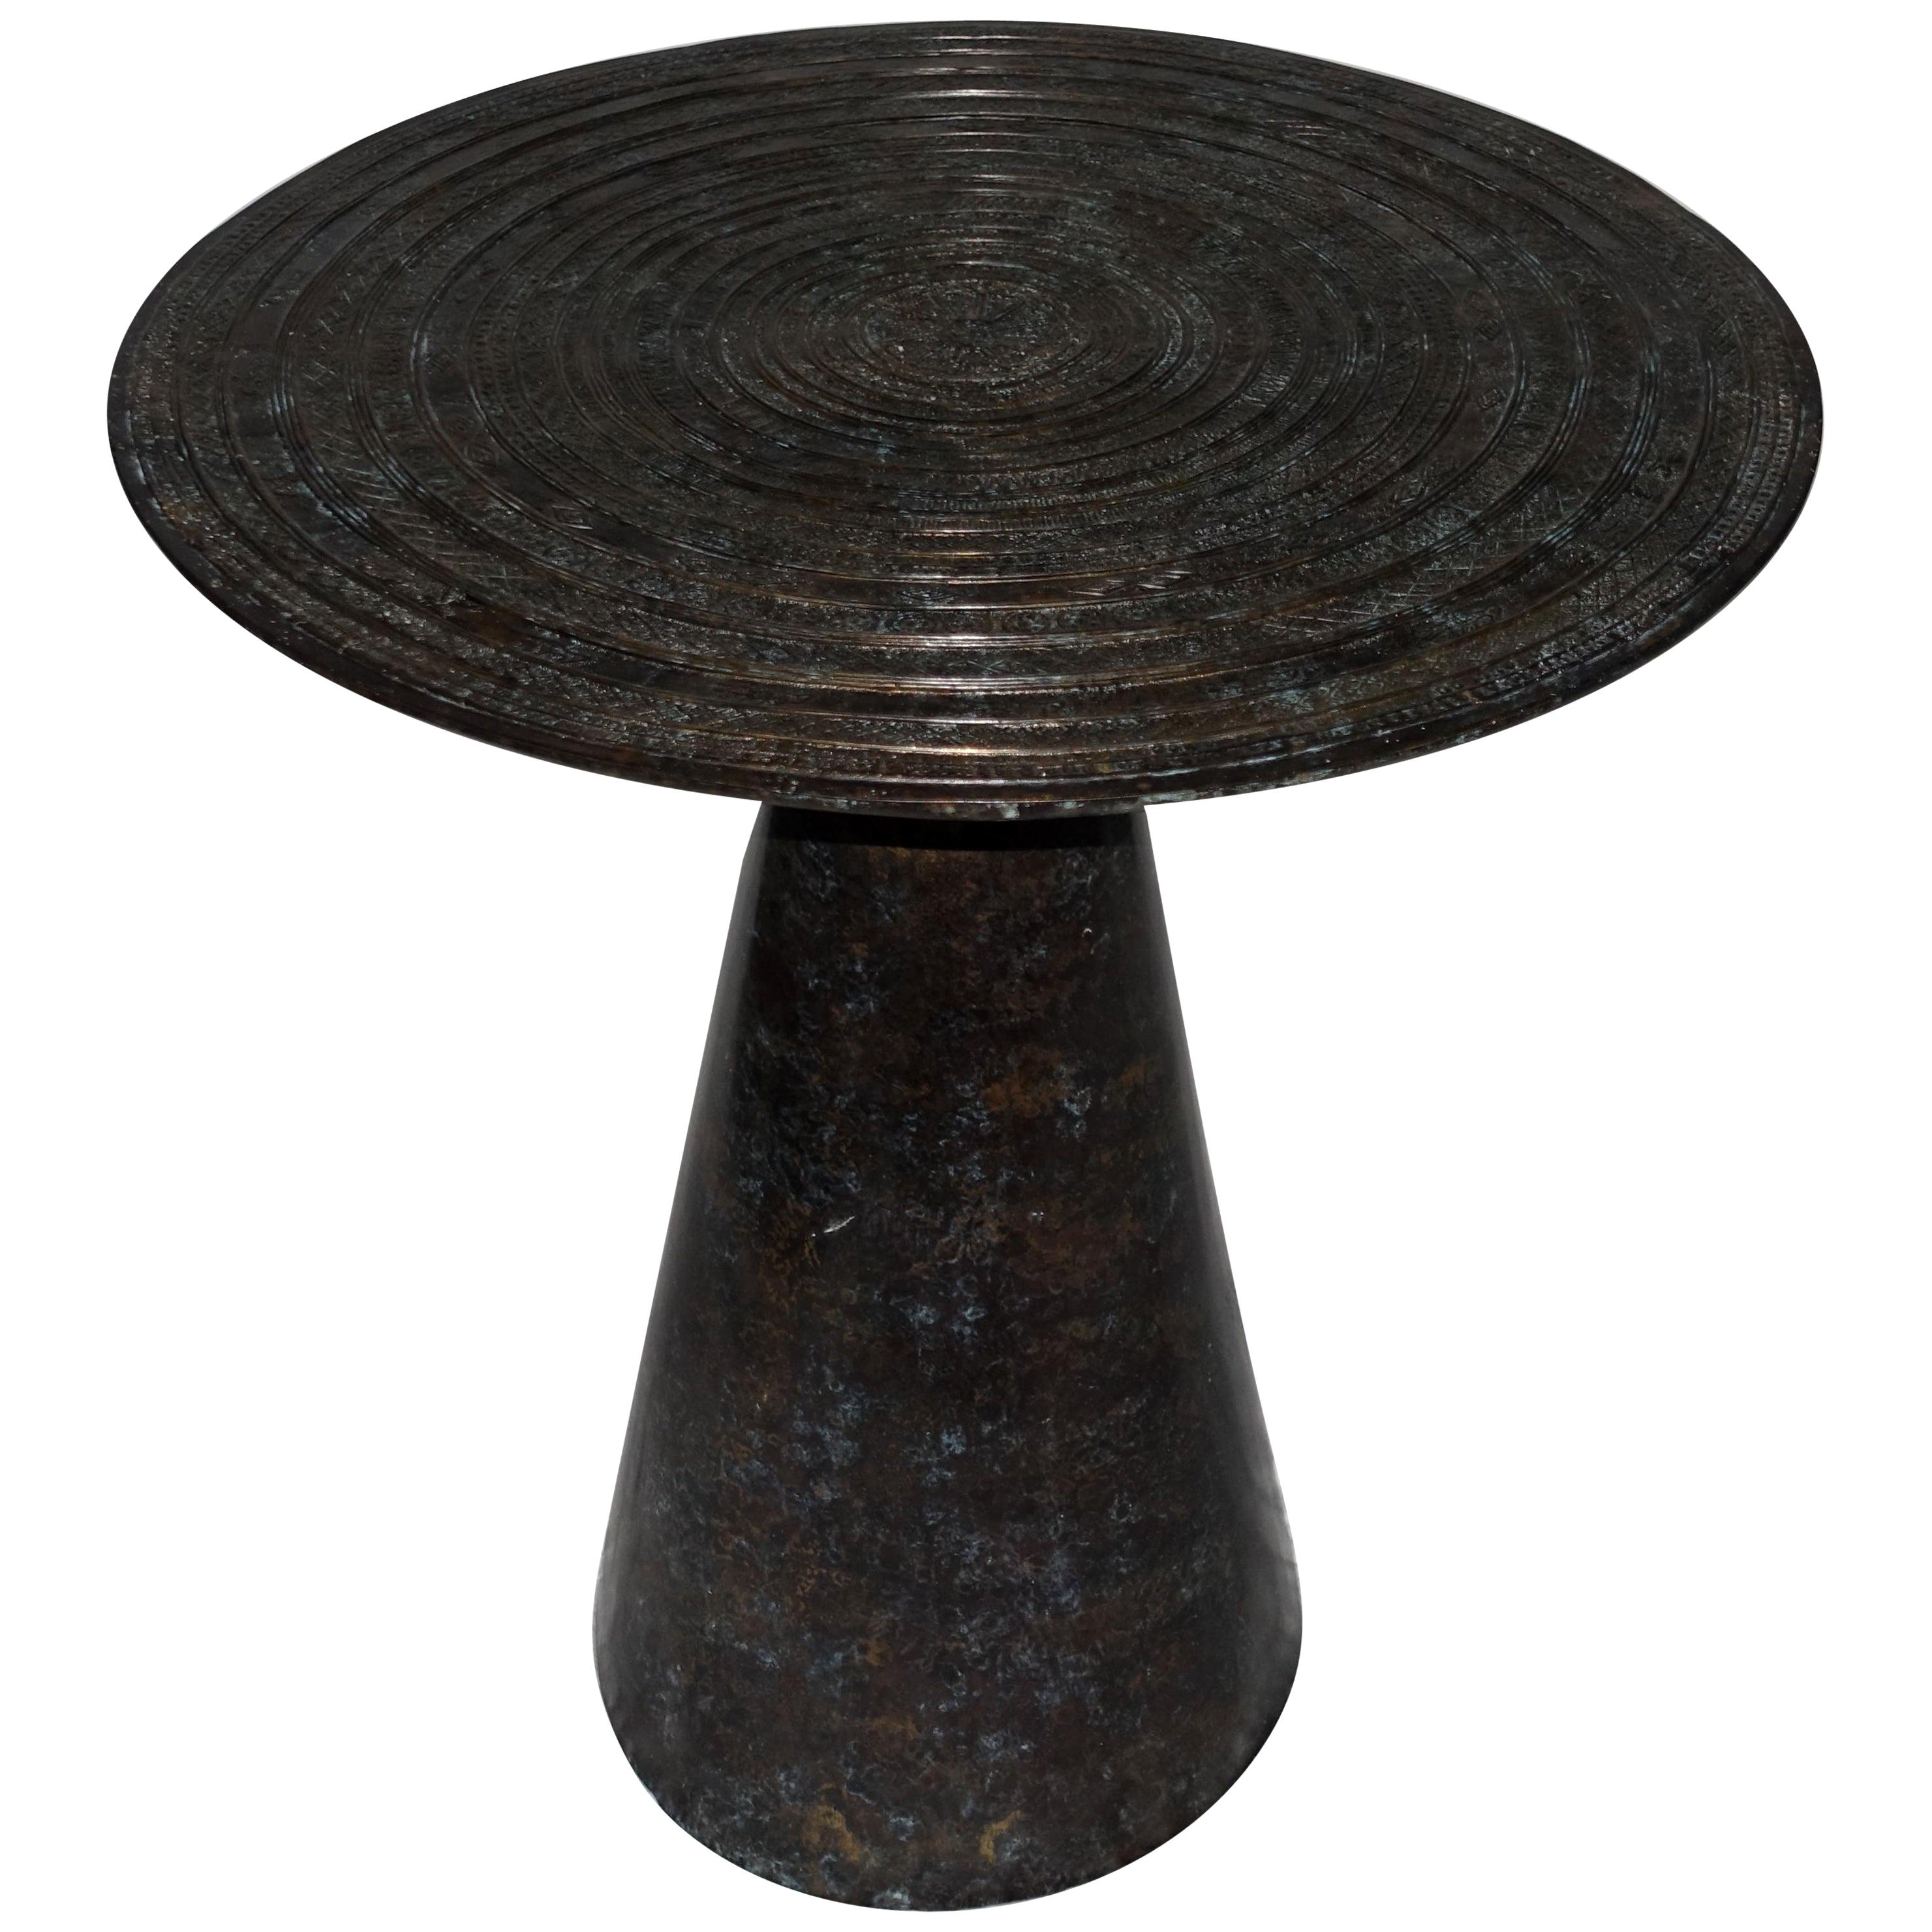 Bronze Chieftain Drum Design Top Side Table, Cambodia, Contemporary